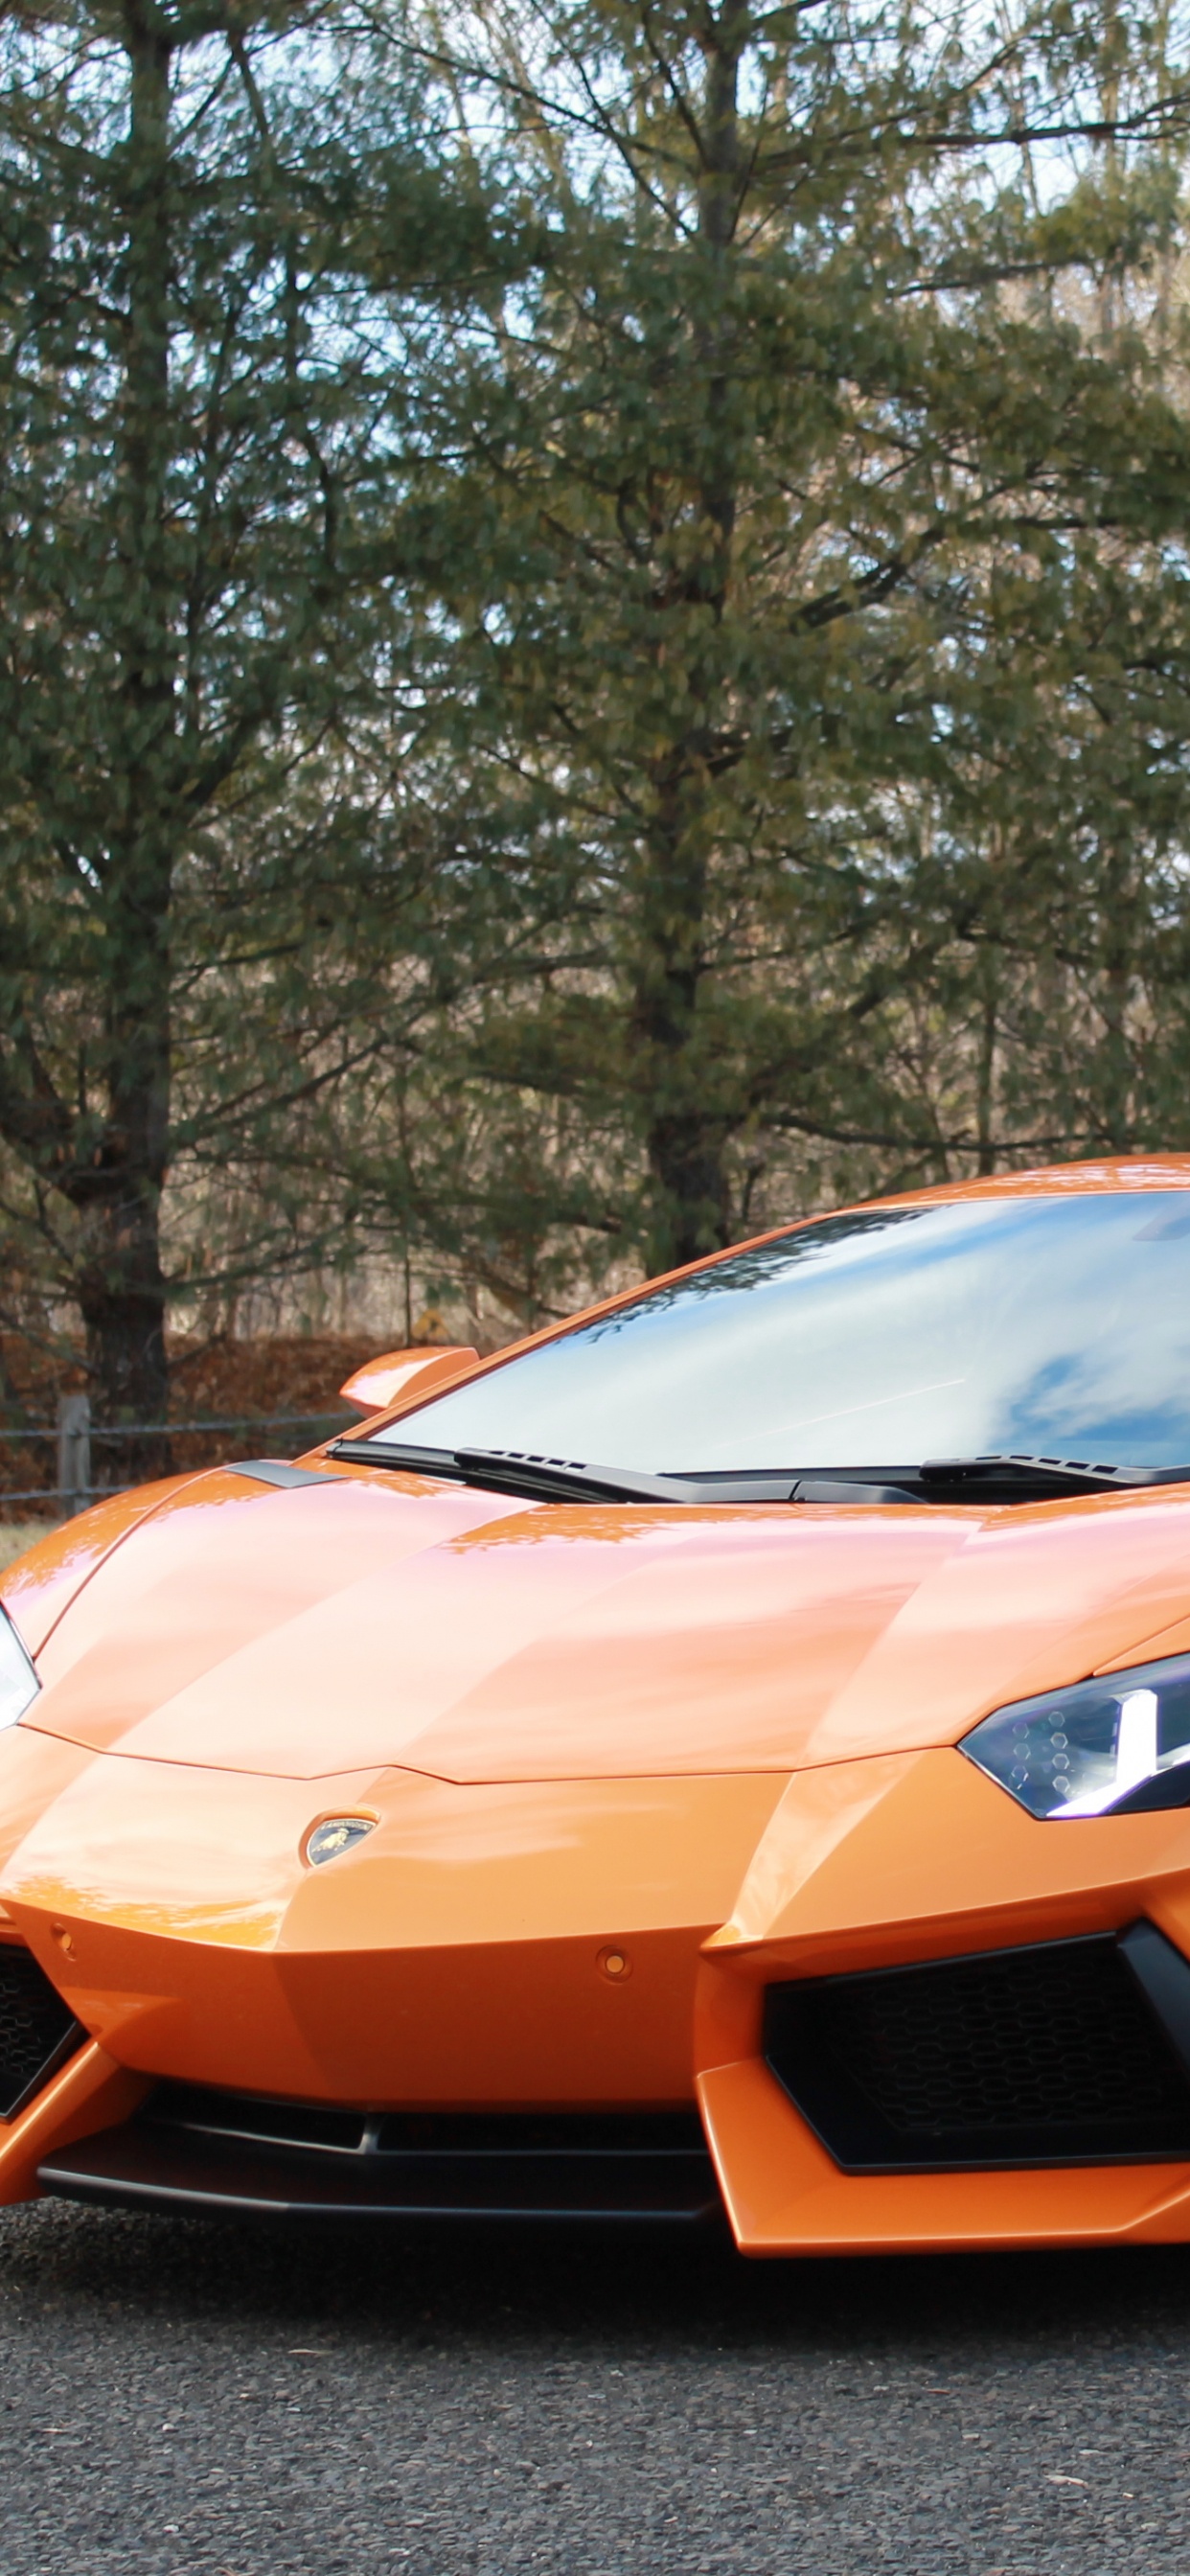 Orange Lamborghini Aventador Parked on Black Asphalt Road During Daytime. Wallpaper in 1242x2688 Resolution